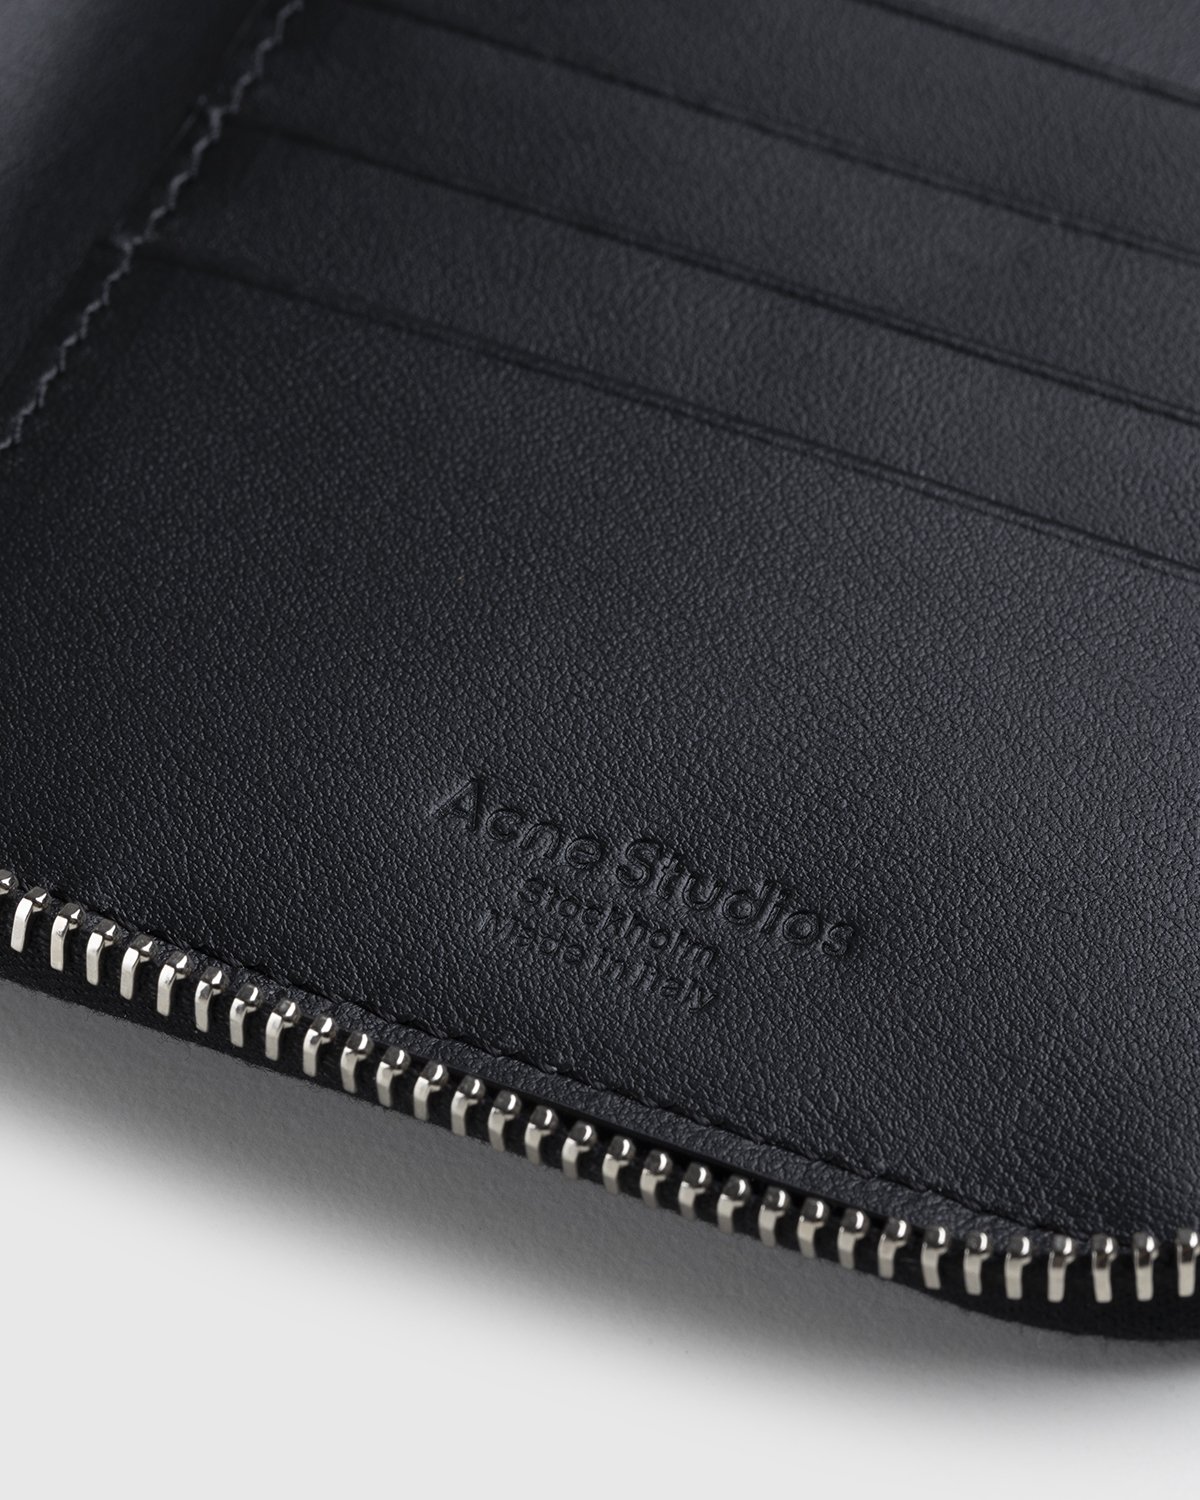 Acne Studios - Zippered Wallet Black - Accessories - Black - Image 3